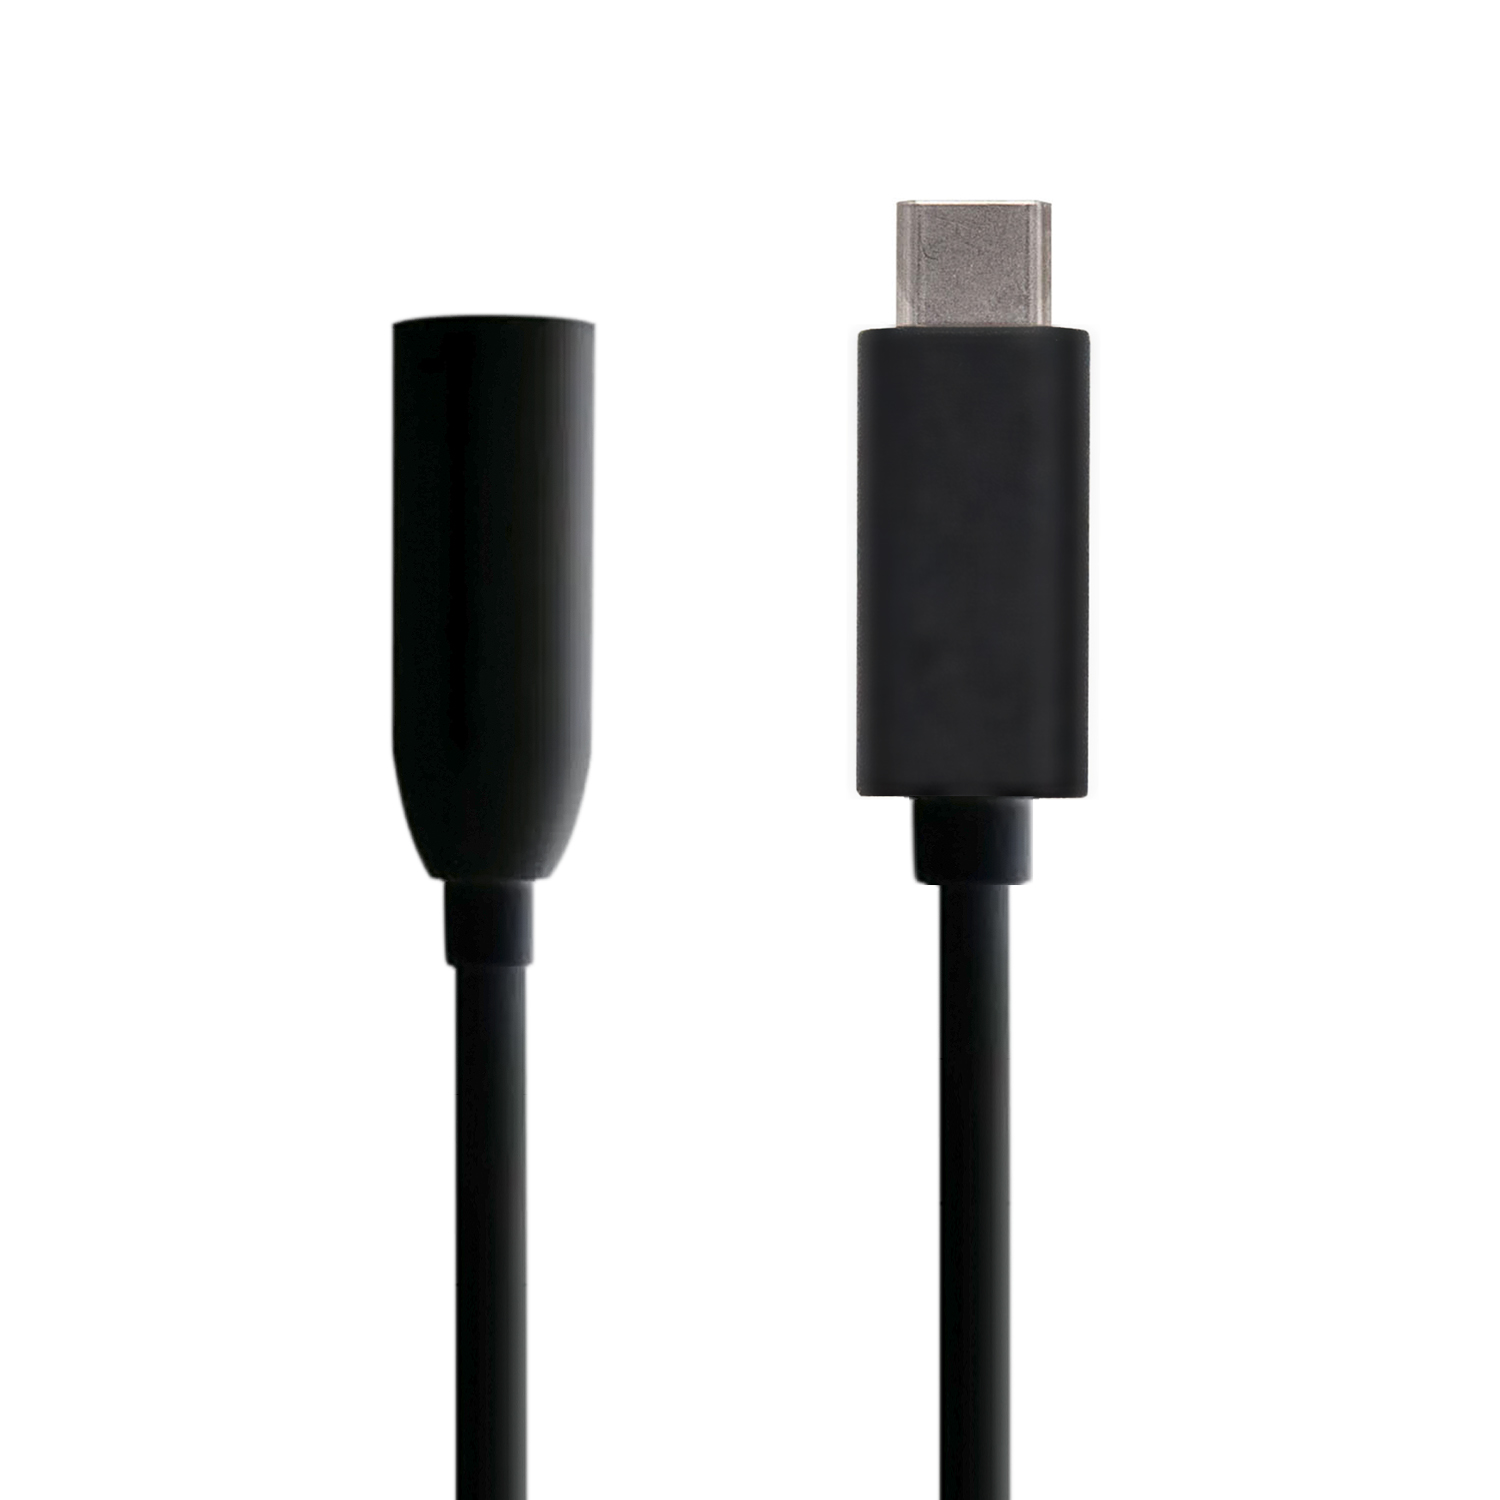 Aisens Adaptador USB-C Macho a Jack 3.5mm Hembra 15cm Blanco